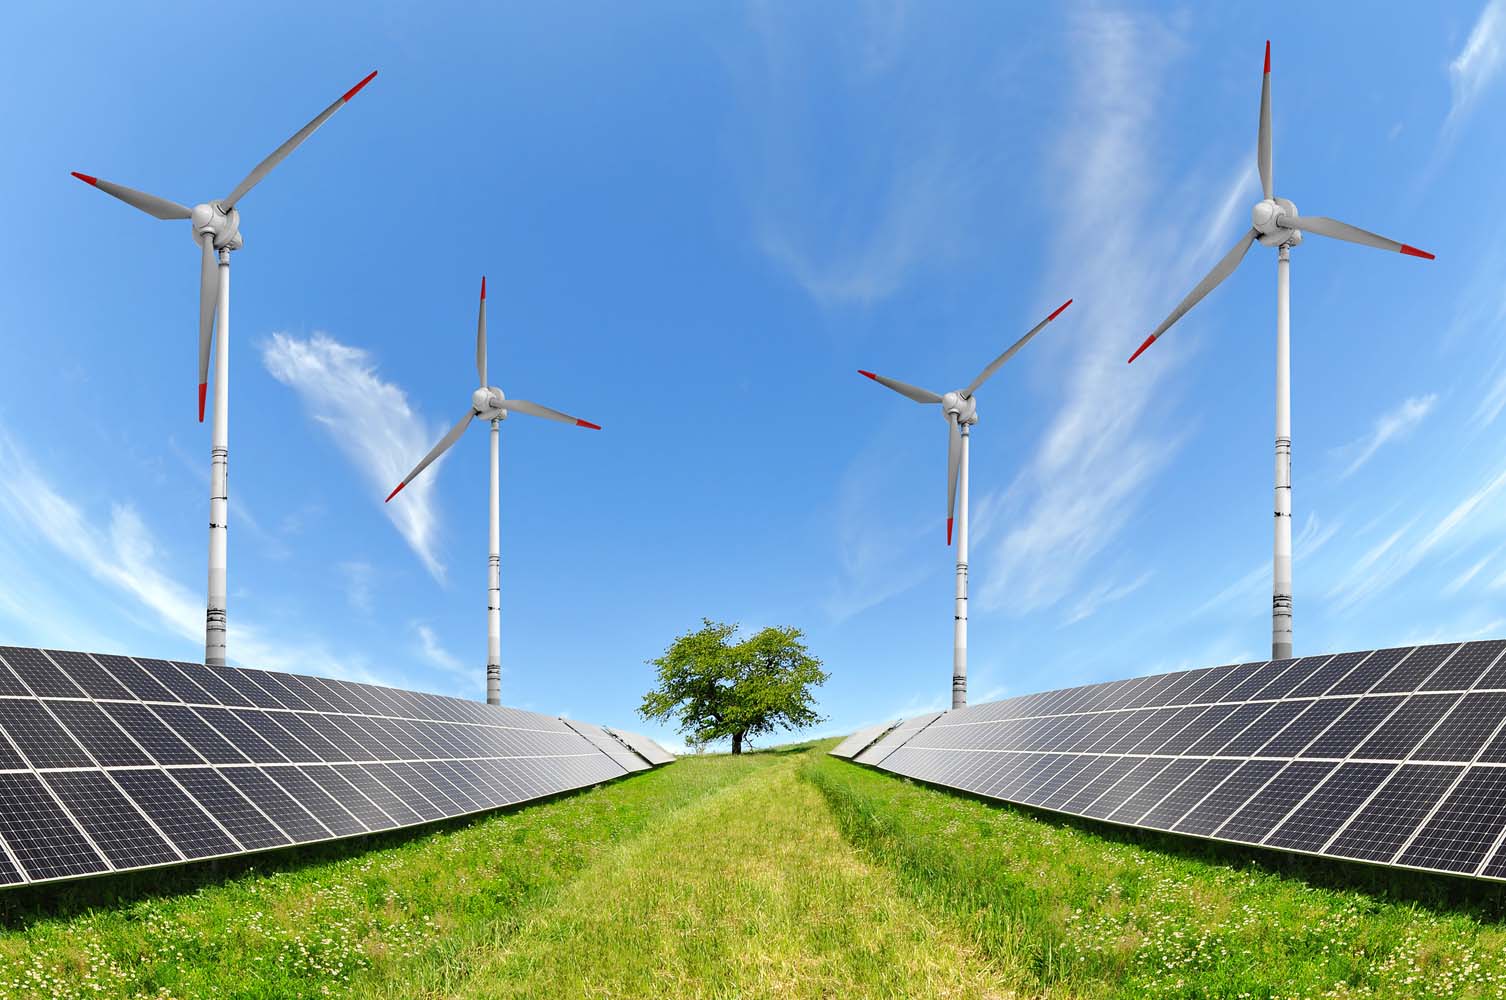 bigstock-Solar-energy-panels-and-wind-t-90315959-Copy.jpg